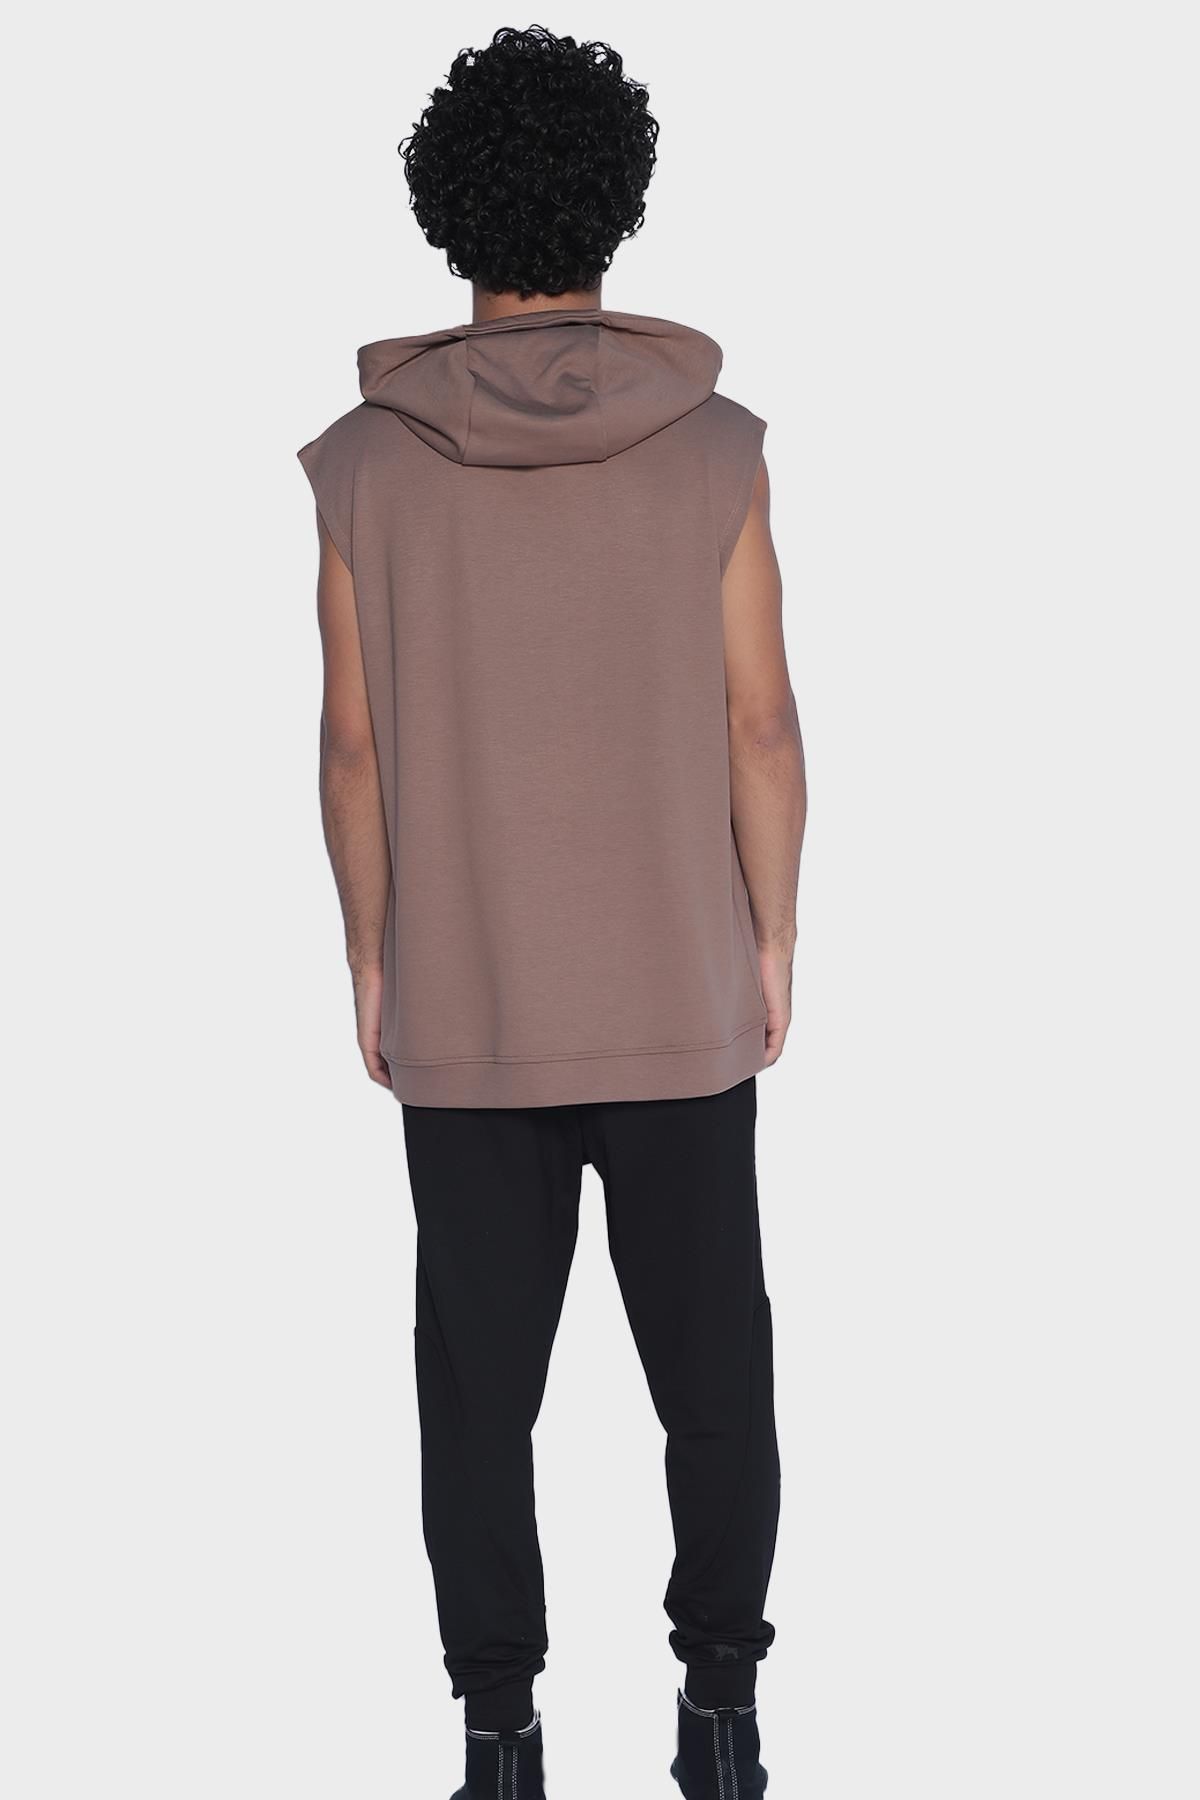 Mens hooded and sleeveless sweatshirt - Camel